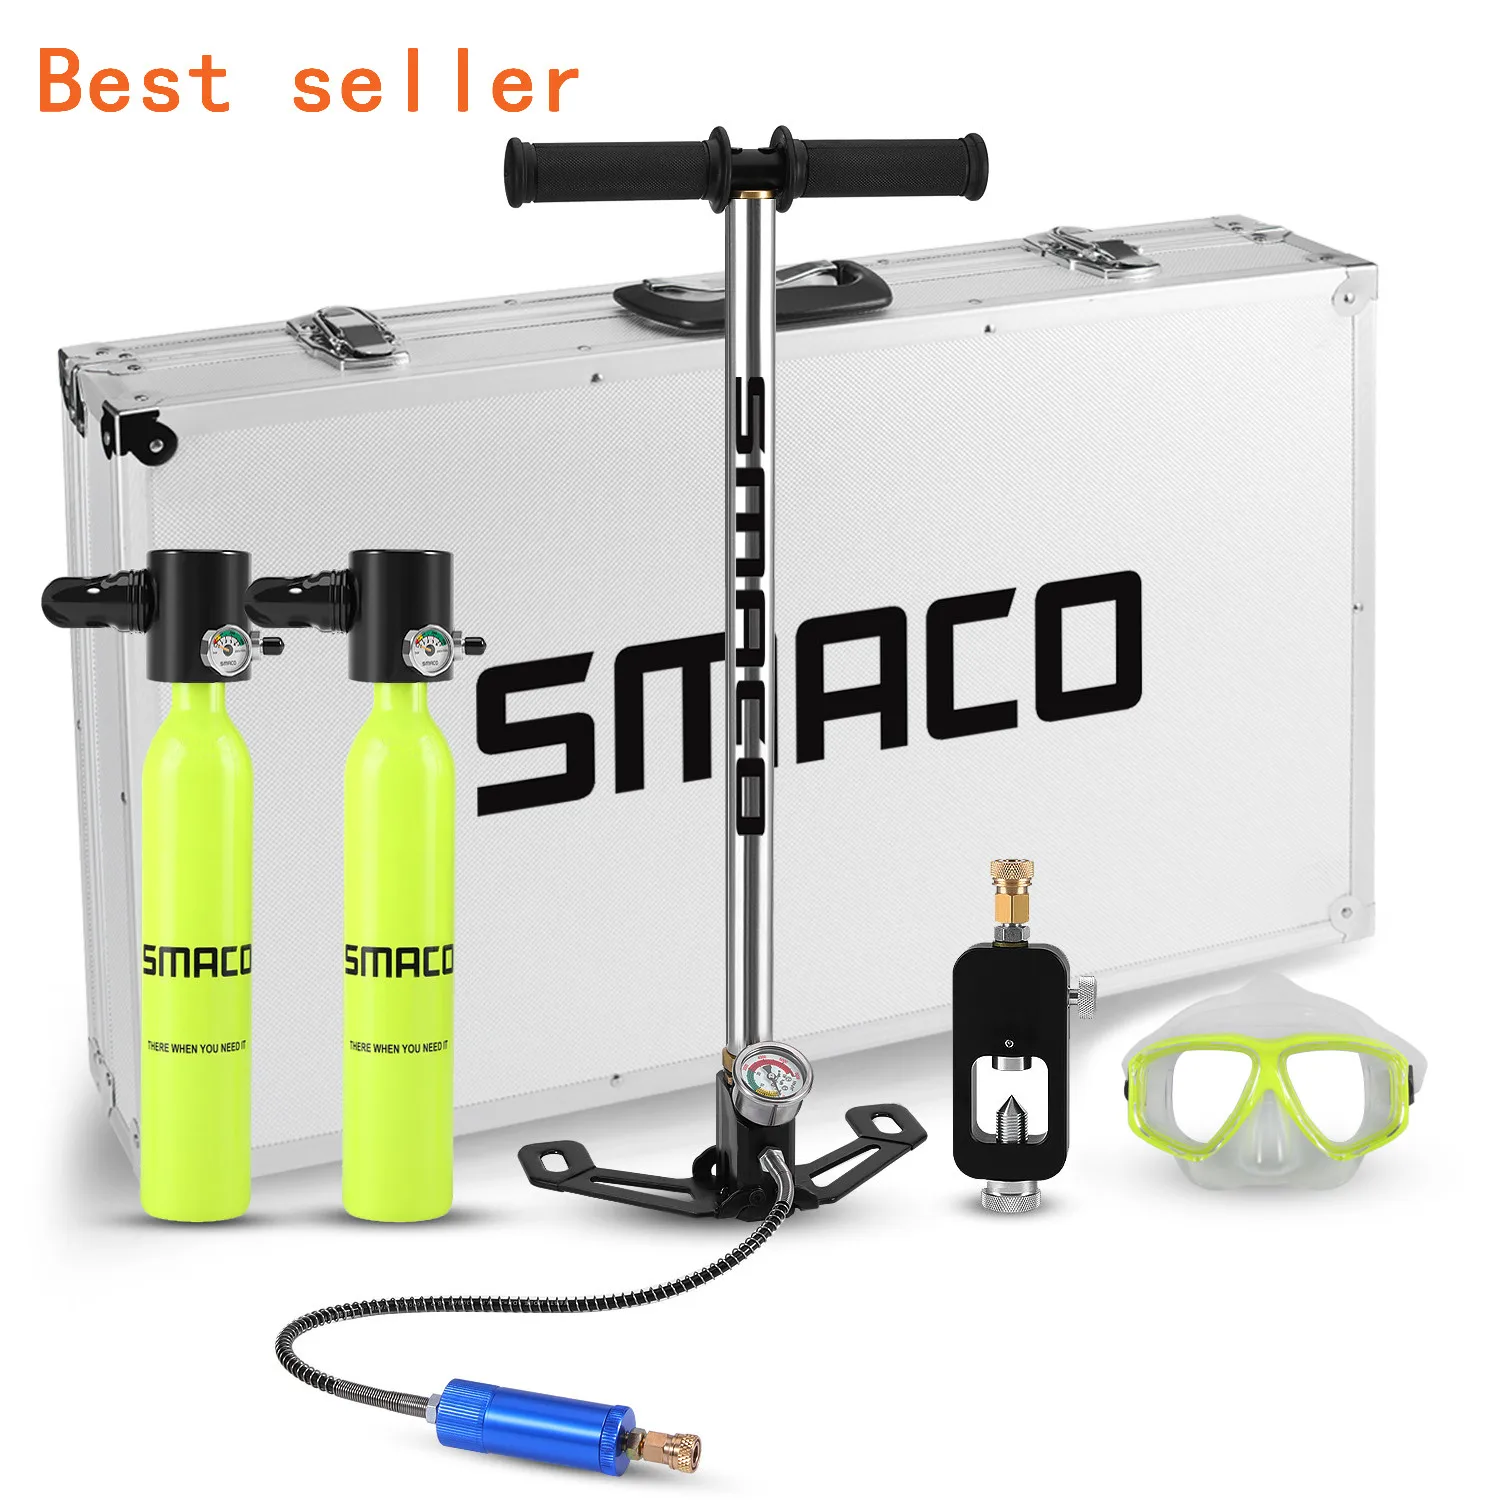 

SMACO Scuba Spare Oxygen Air Tank, Mini Scuba Diving Cylinder Set Water Sport Equipment, Yellow